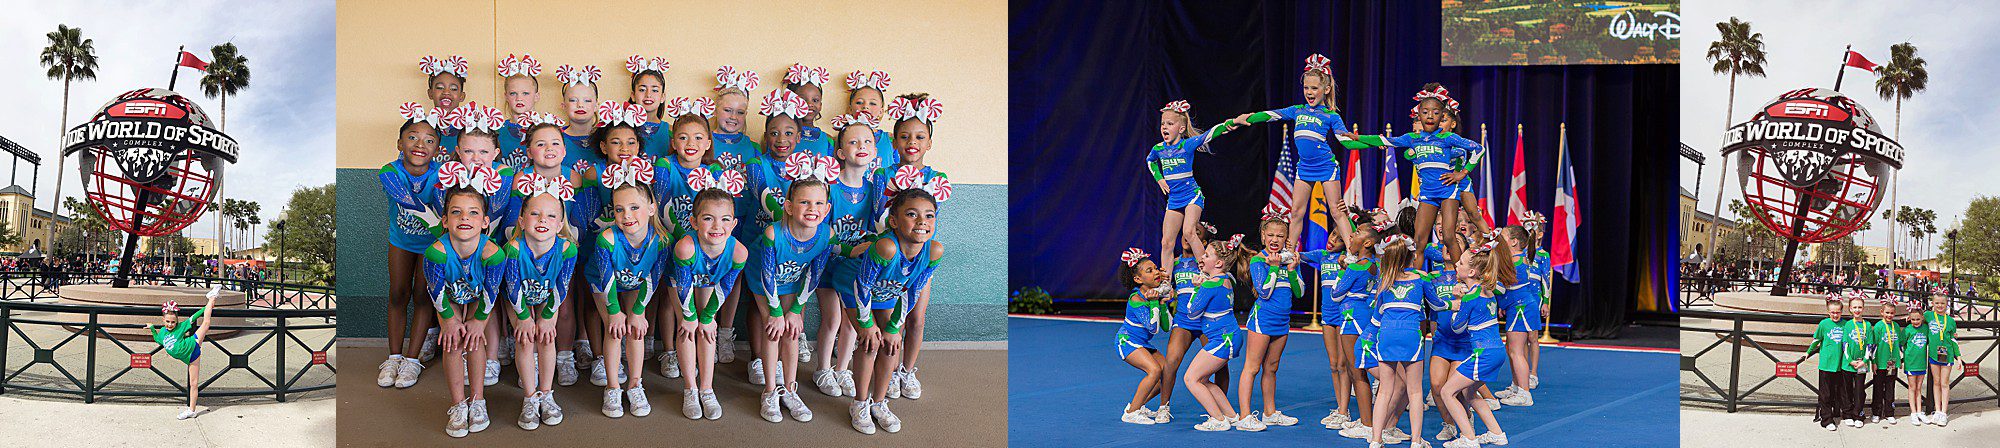 marietta child photographer - cheerleading team in disney